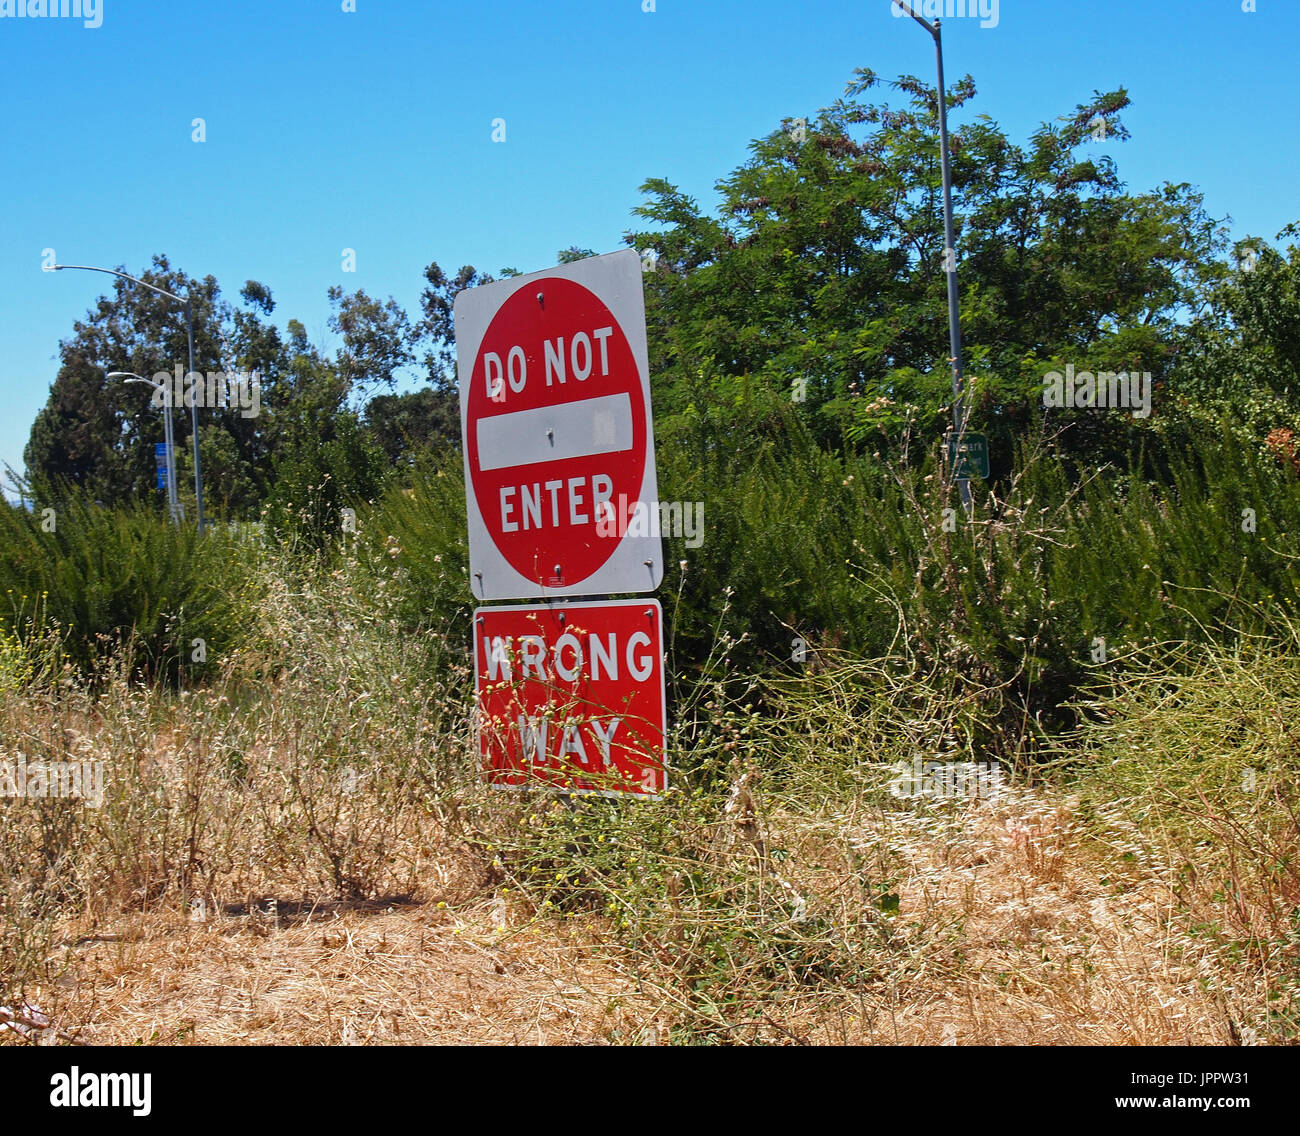 wrong way, do not enter. Traffic sign, symbol, California Stock Photo